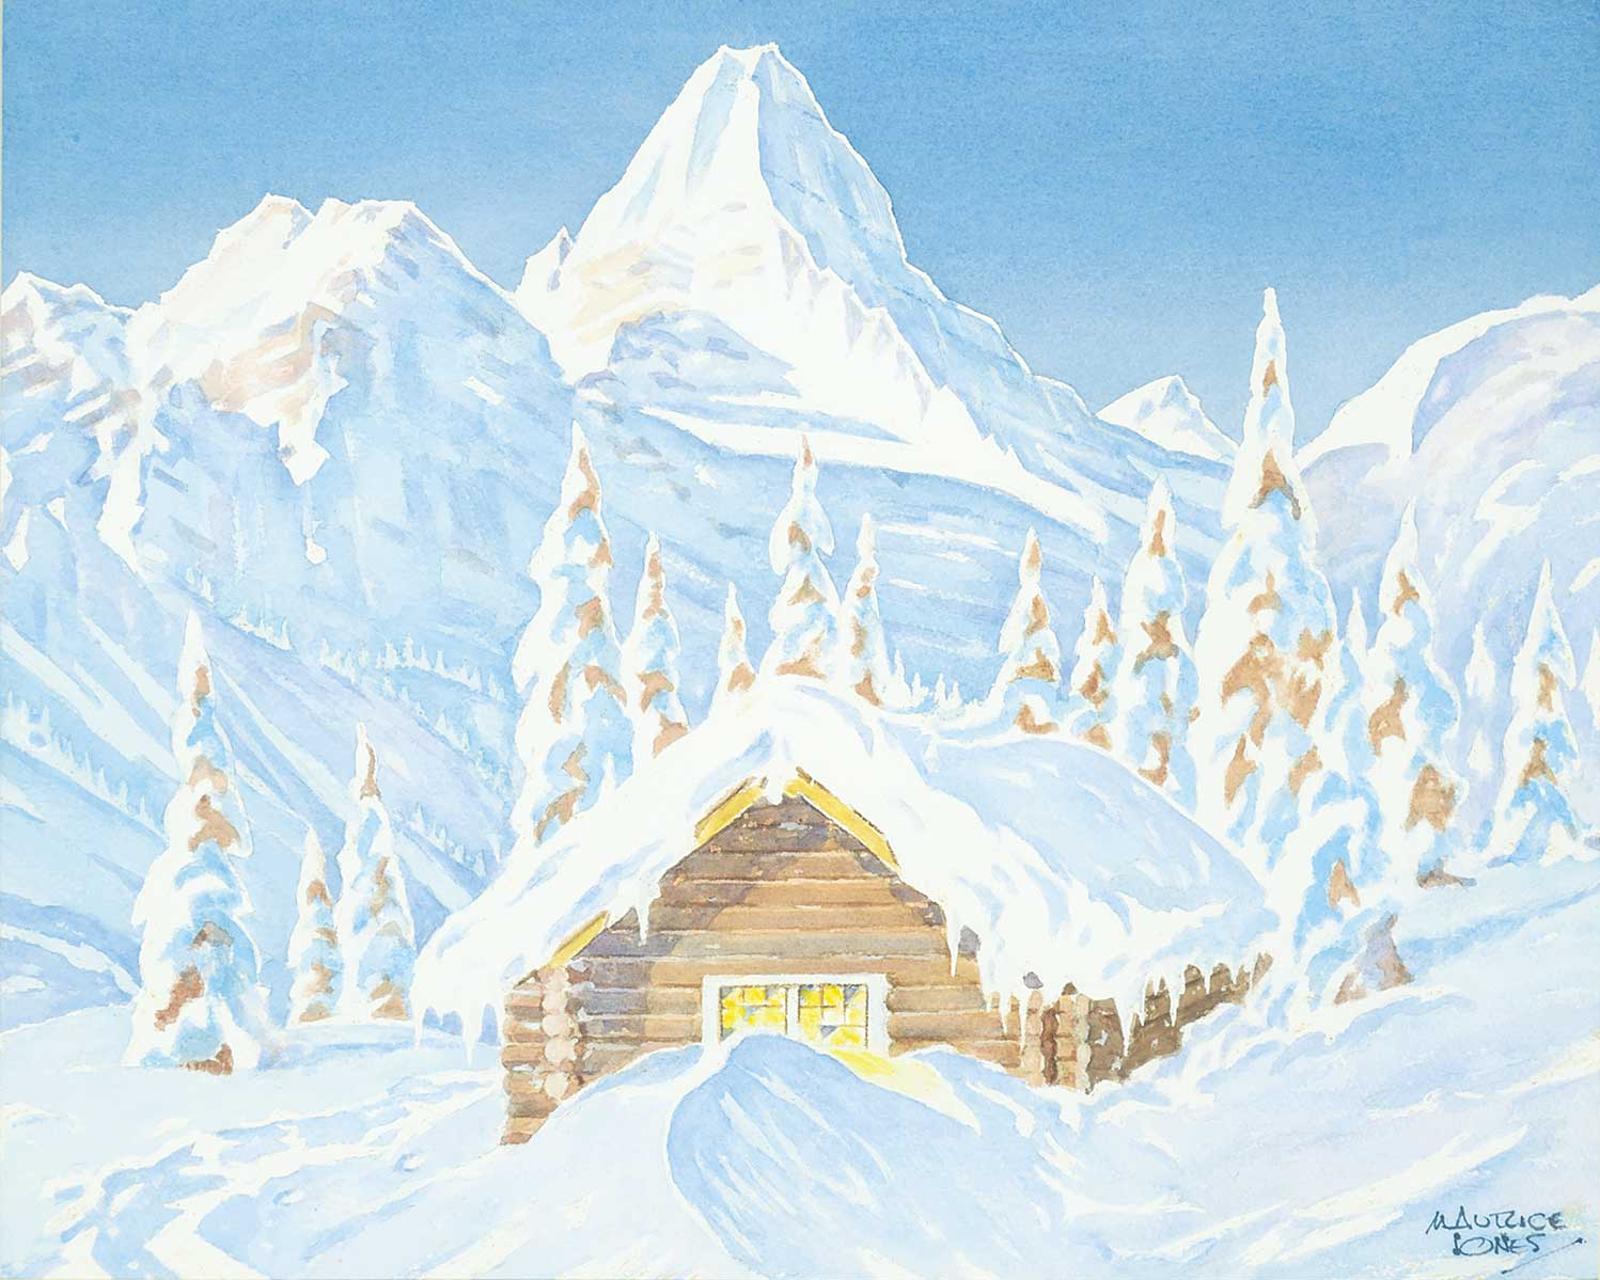 Maurice Jones - Untitled - Cabin in Wintertime